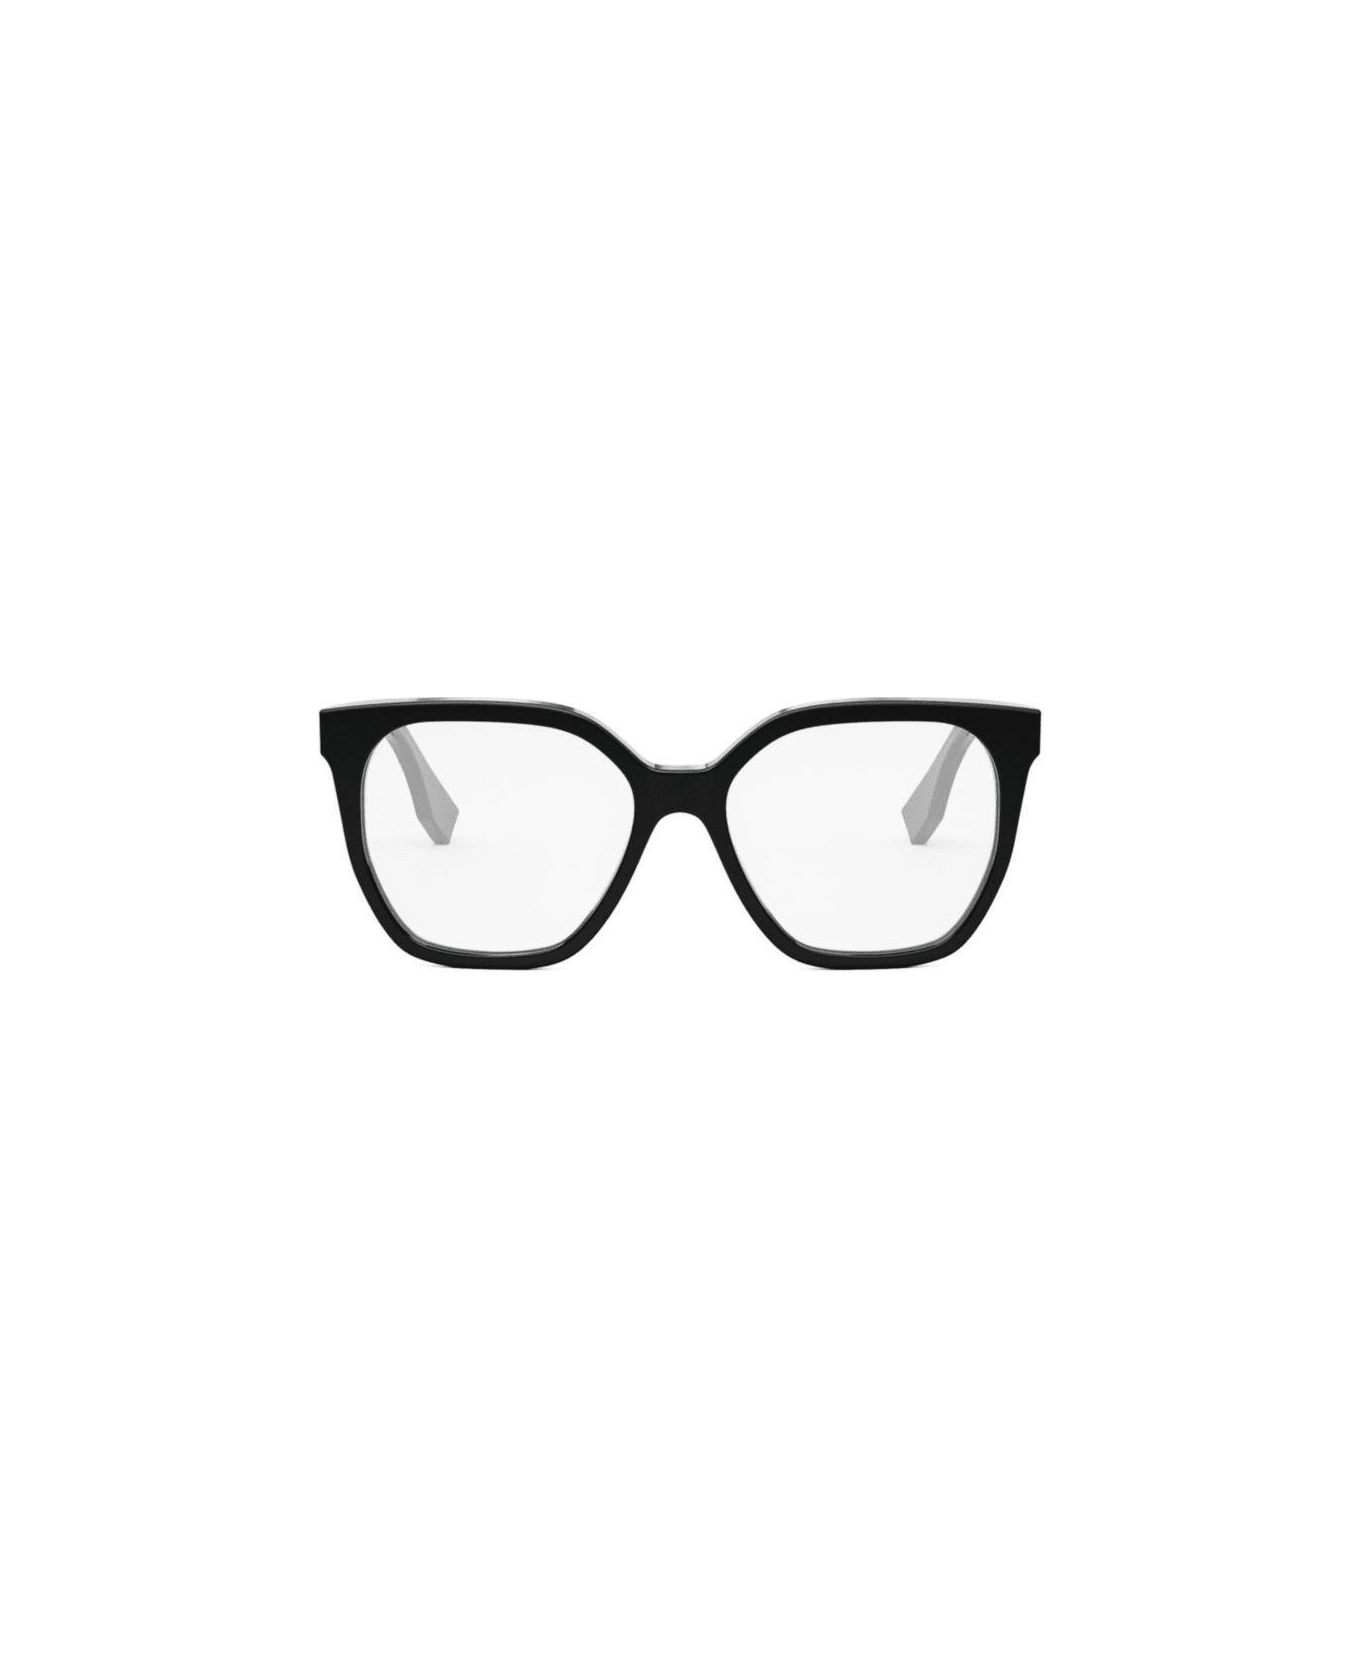 Fendi Eyewear Square Frame Glasses - 001